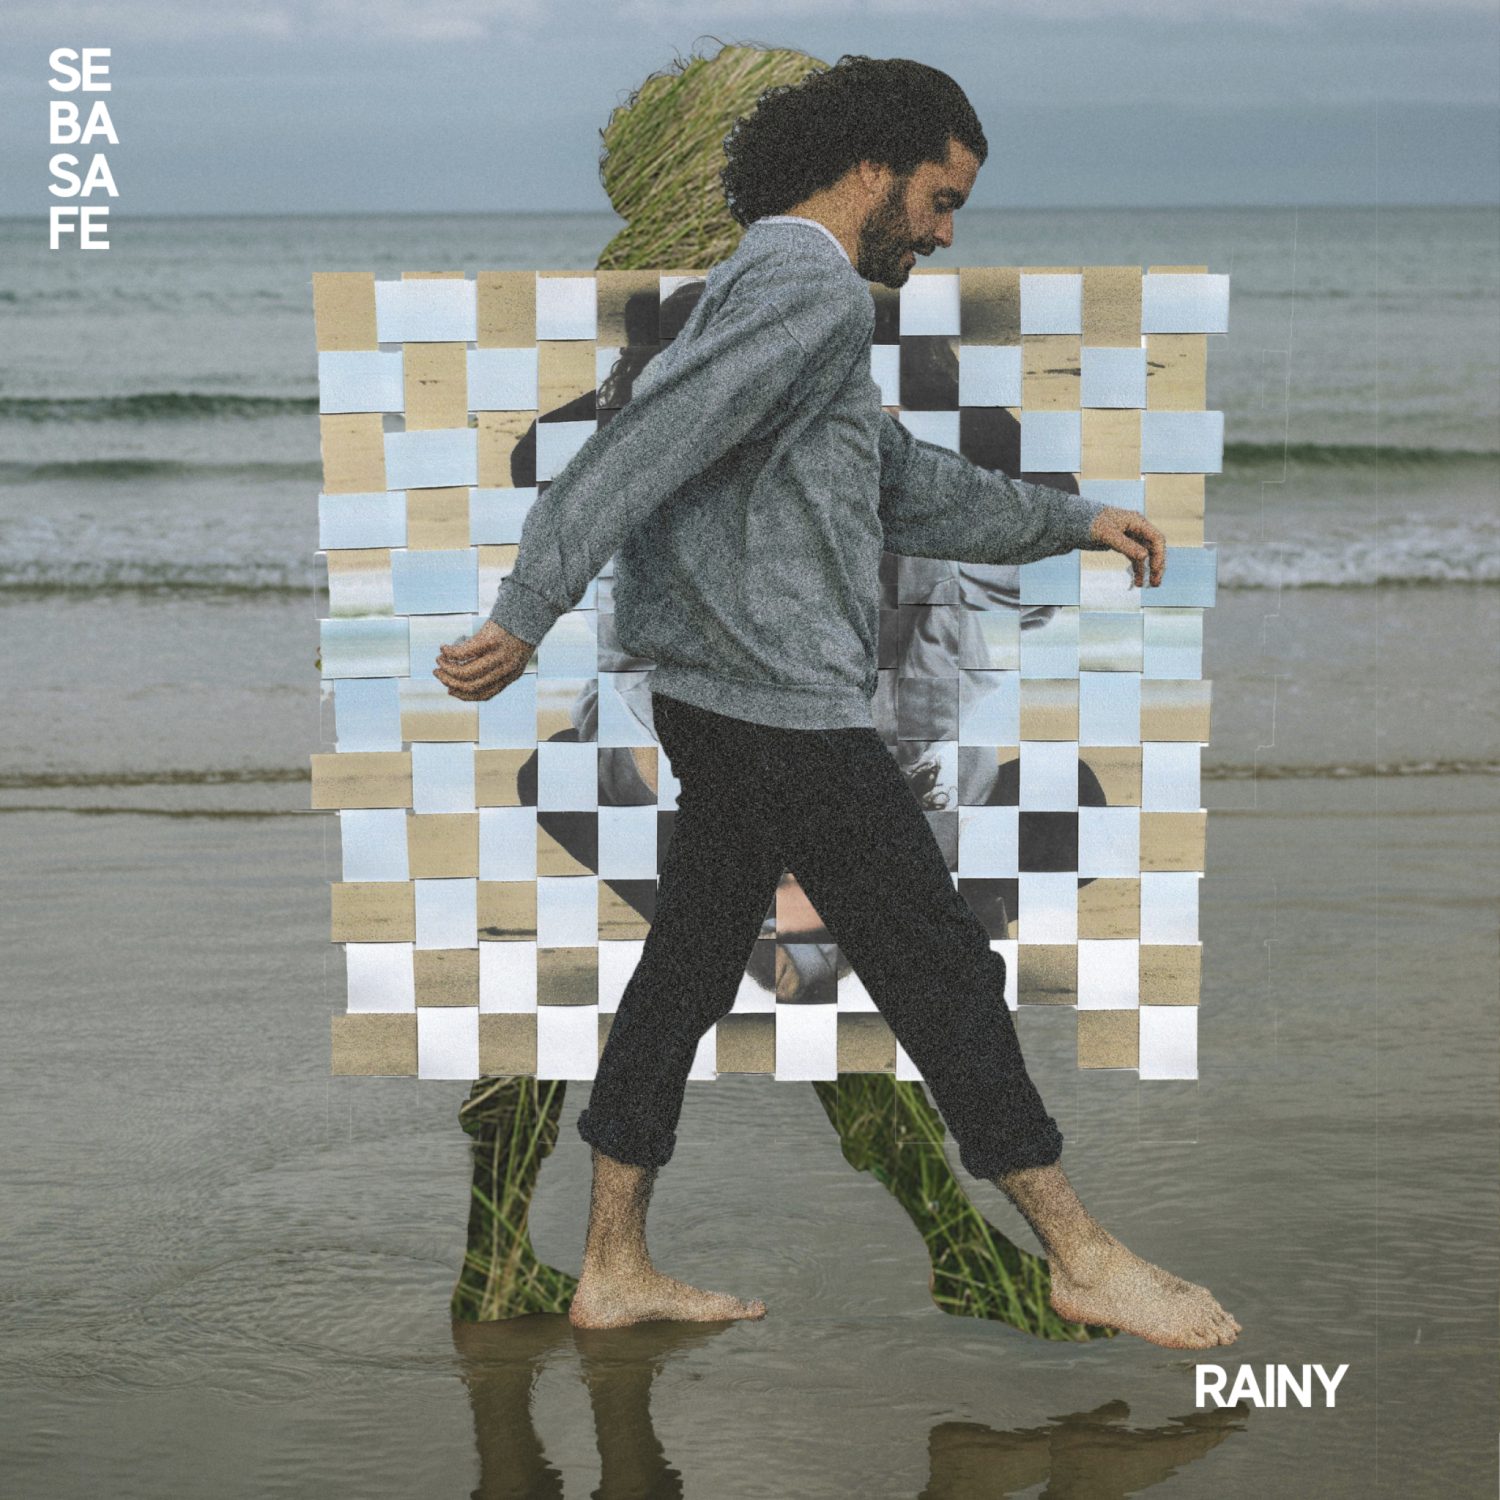 EP REVIEW: Rainy by Seba Safe